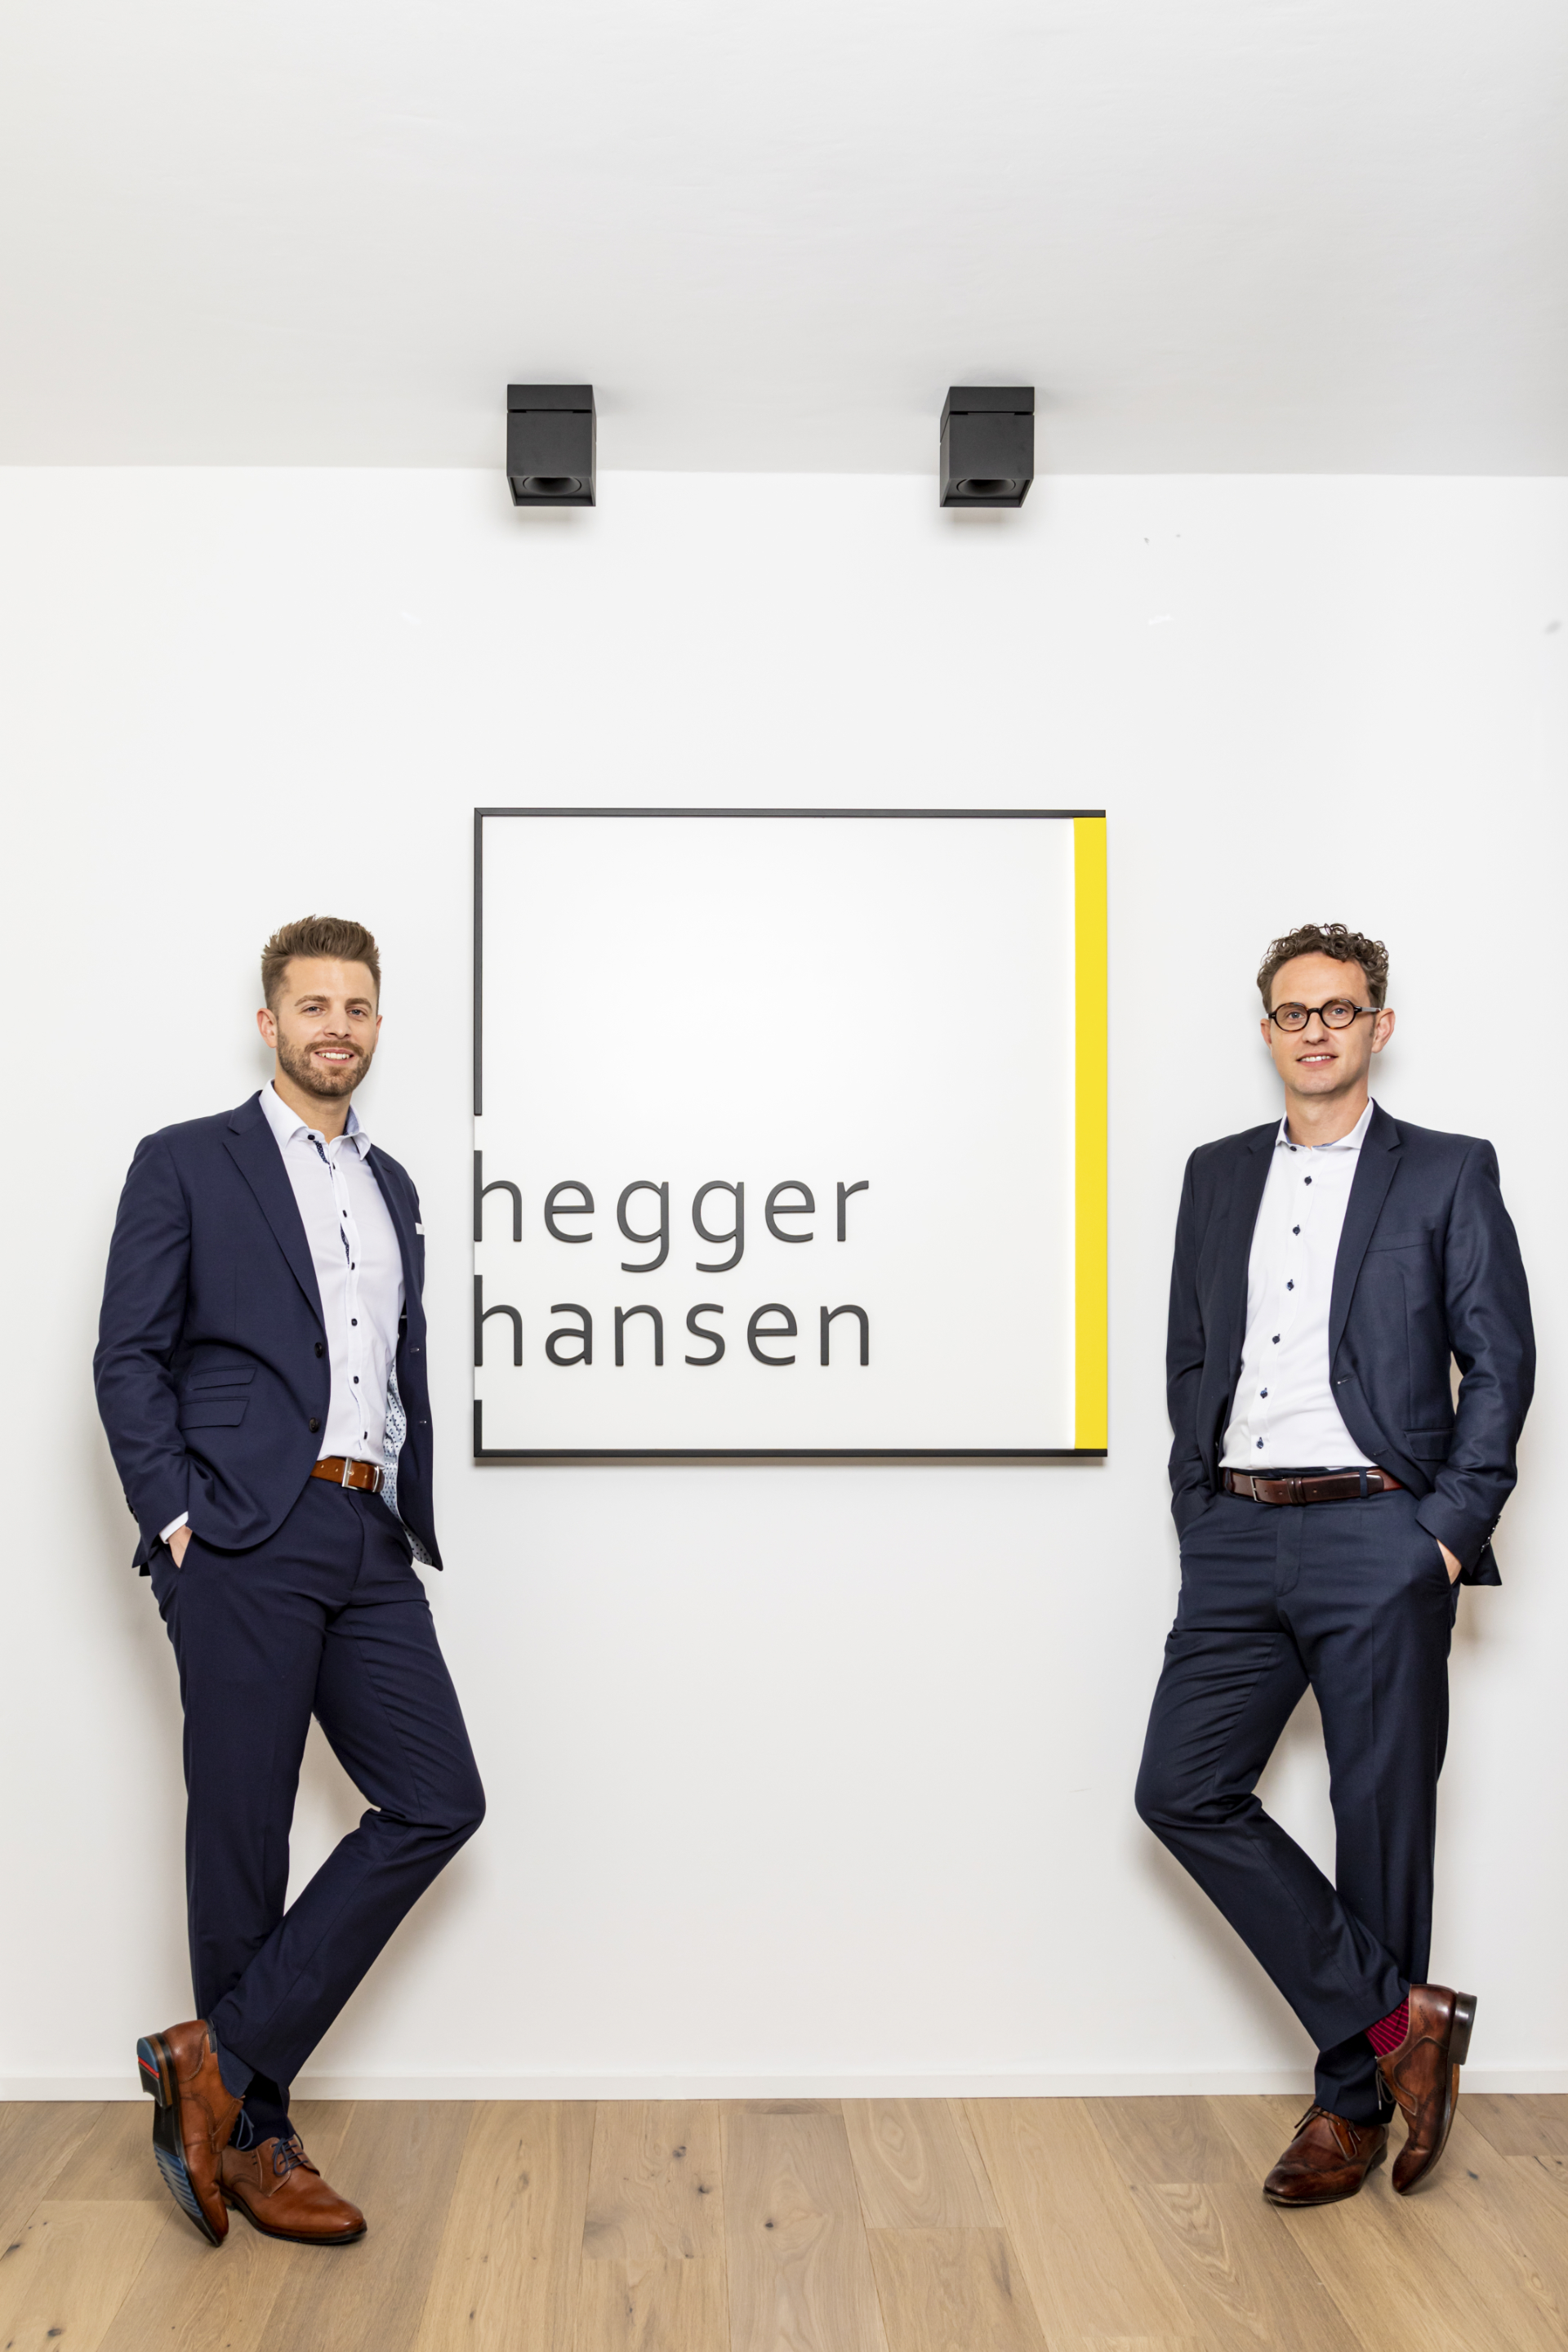  Hegger Hansen Steuerberatung: Unternehmensberatung, Jahresabschluss